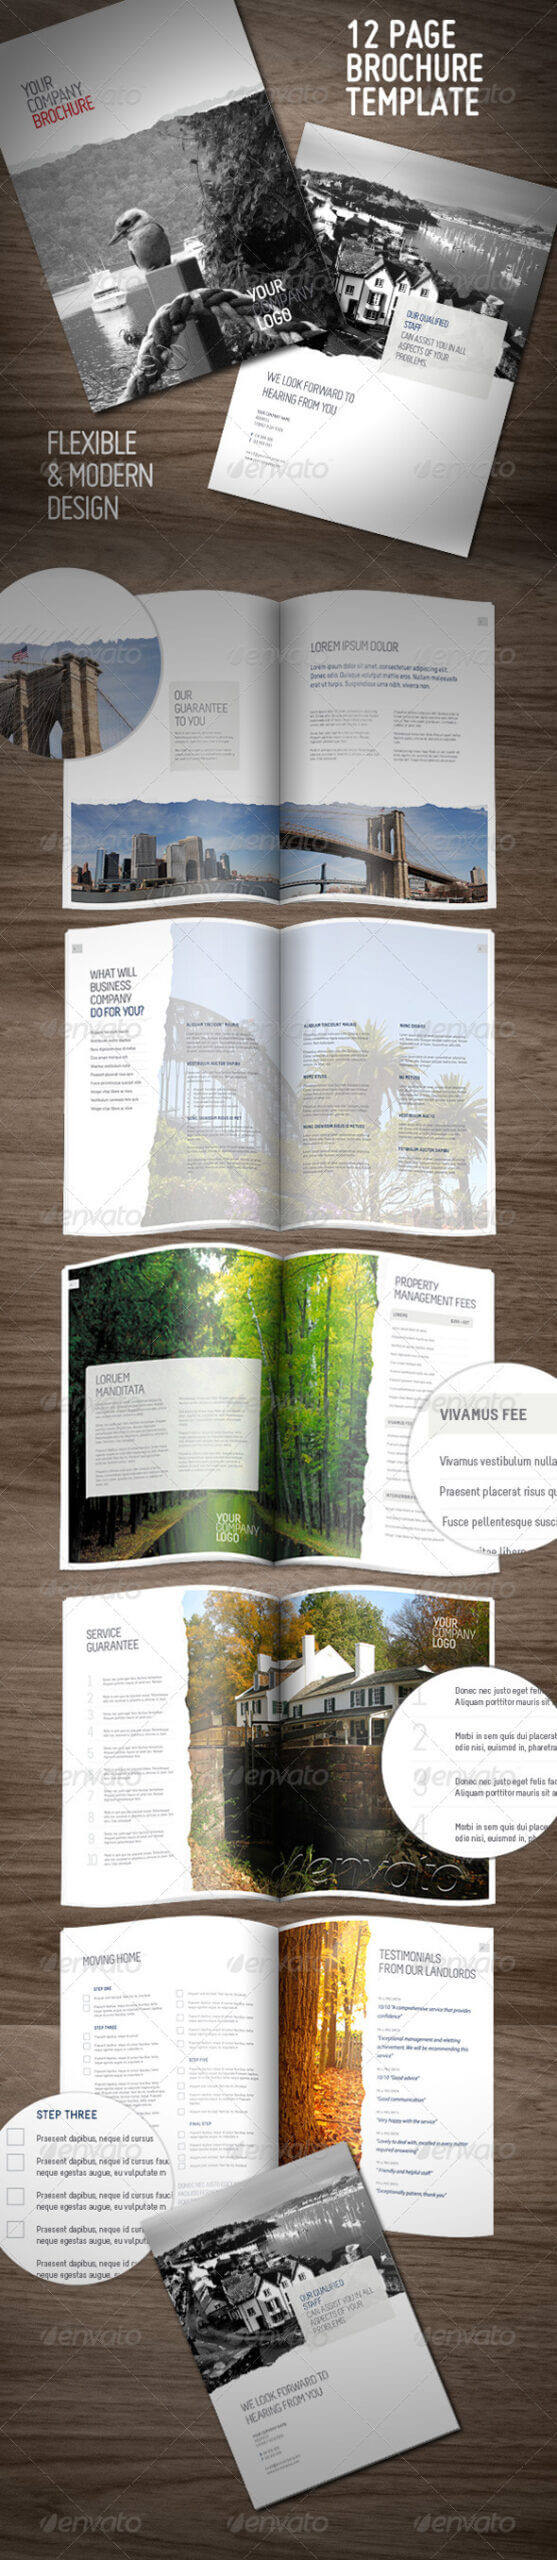 Minimalist Corporate Brochure Templates From Graphicriver Regarding 12 Page Brochure Template